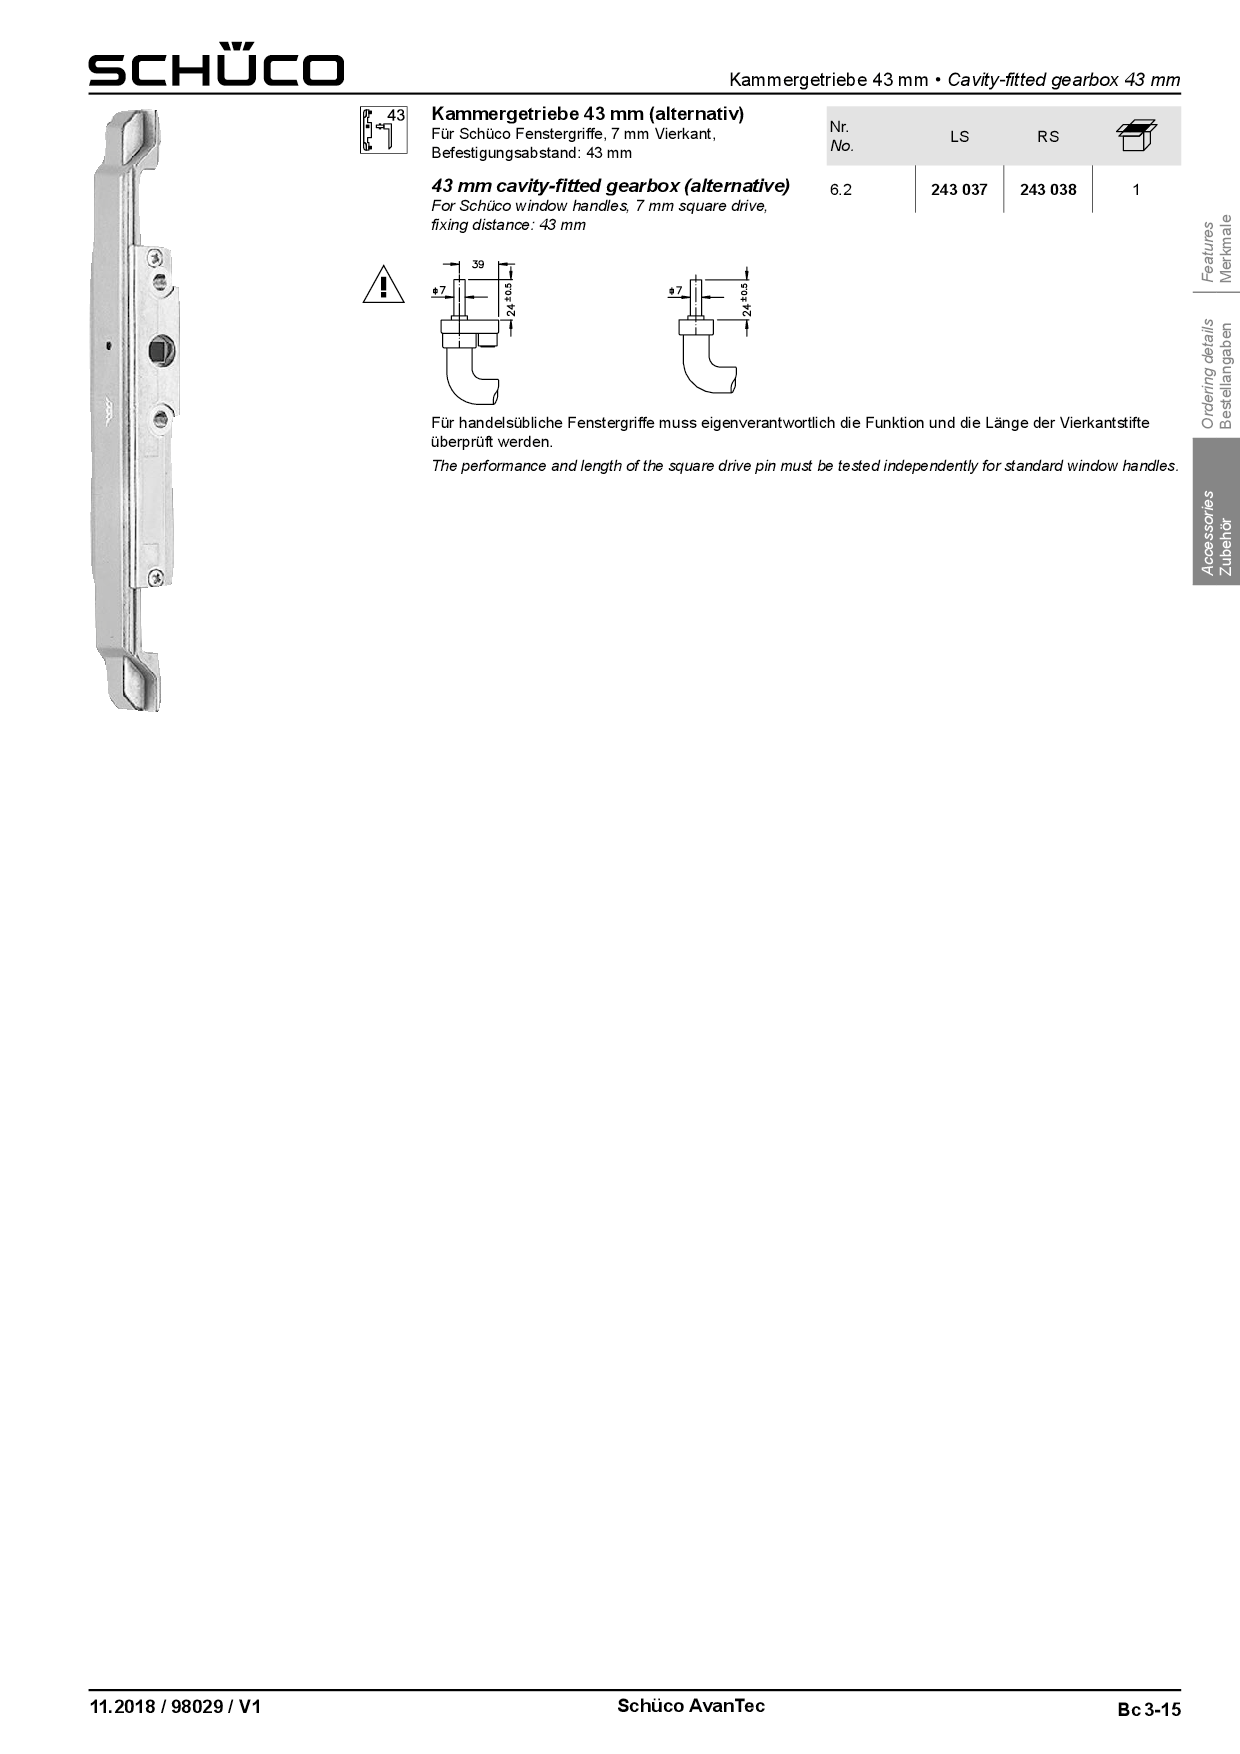 Schüco Kammergetriebe AvanTec 43 mm DIN links 243037 / 275039 /  219899